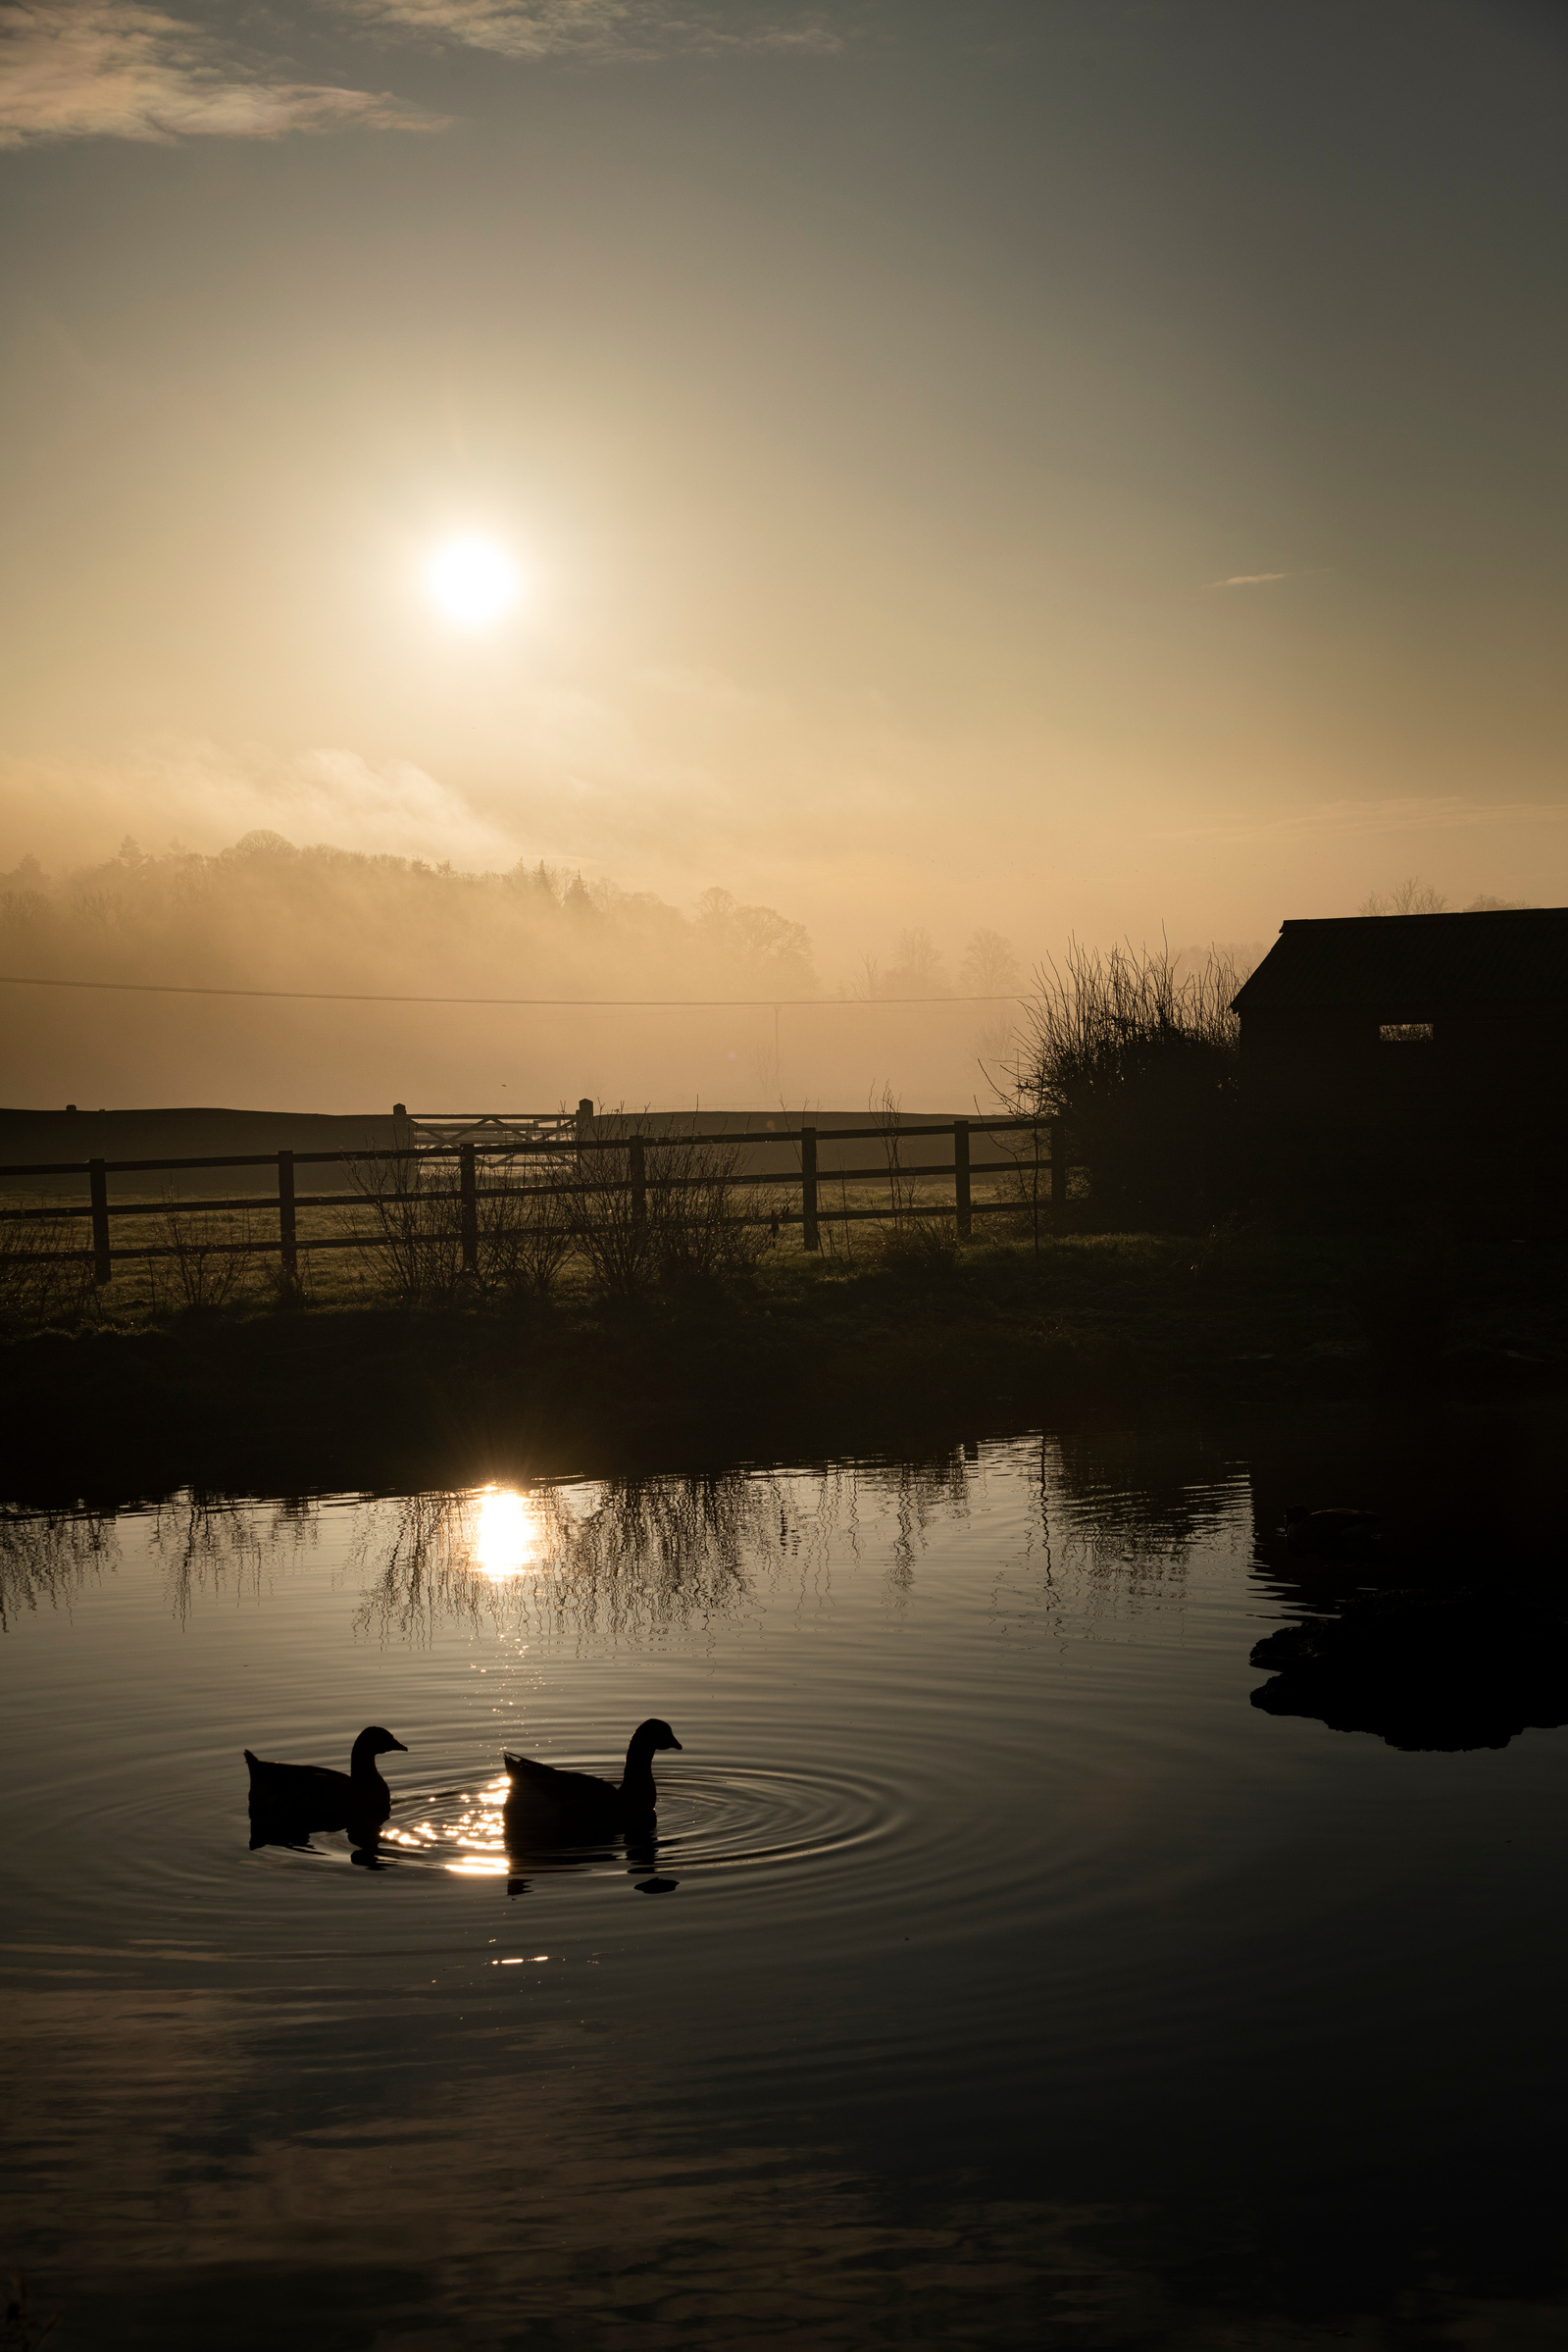 Ducks in the sunrise mist, Little Coxwell, Oxfordshire.